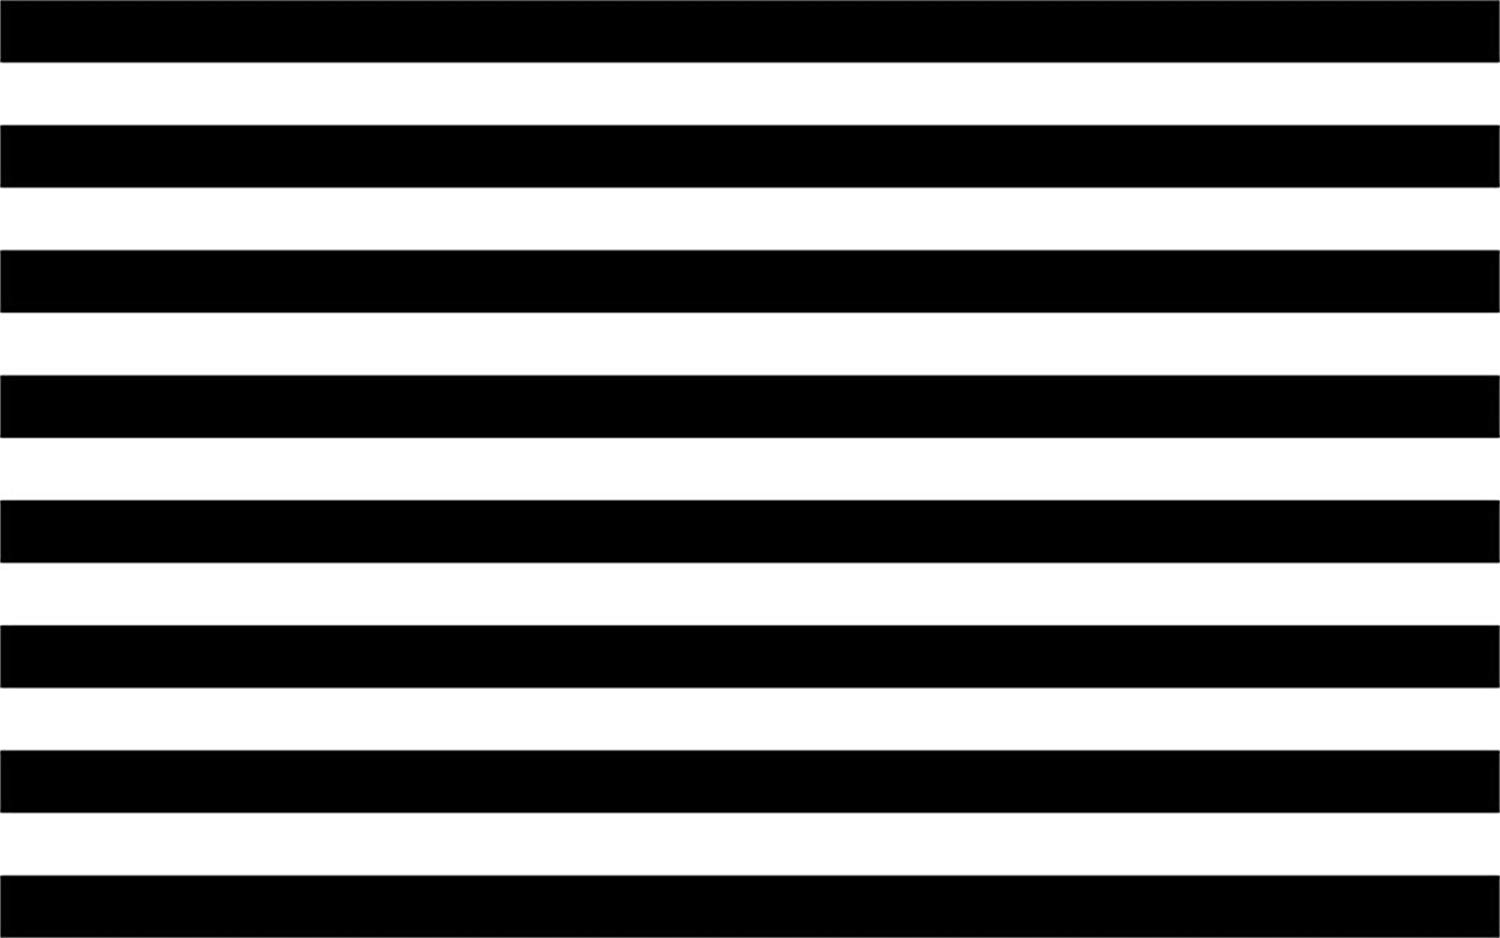 Black And White Line - HD Wallpaper 